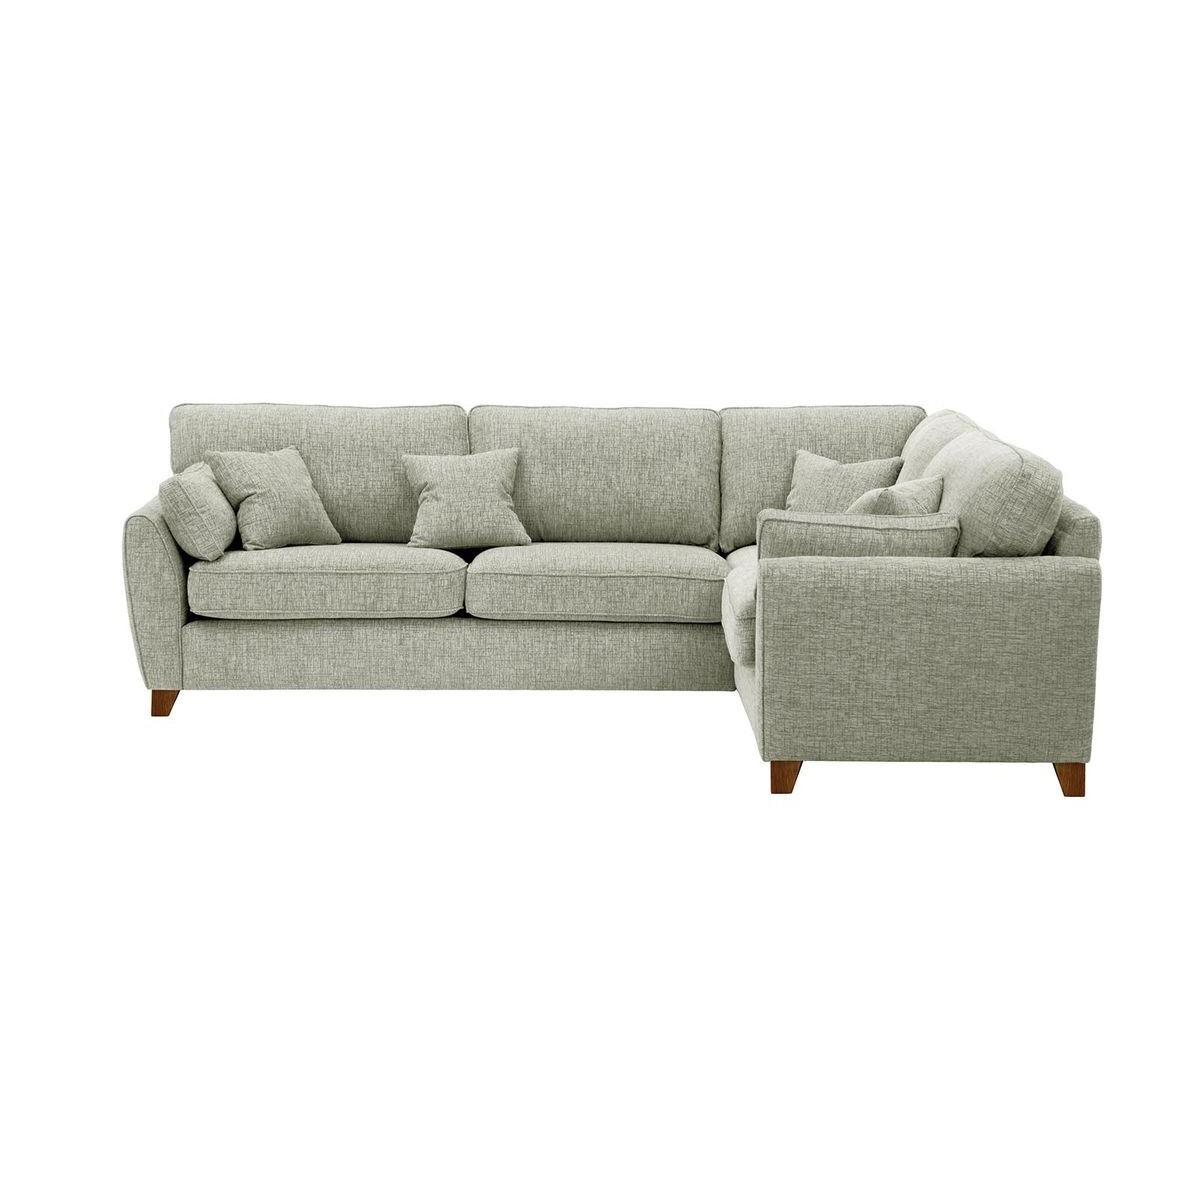 James Large Right Corner Sofa, graphite, Leg colour: aveo - image 1